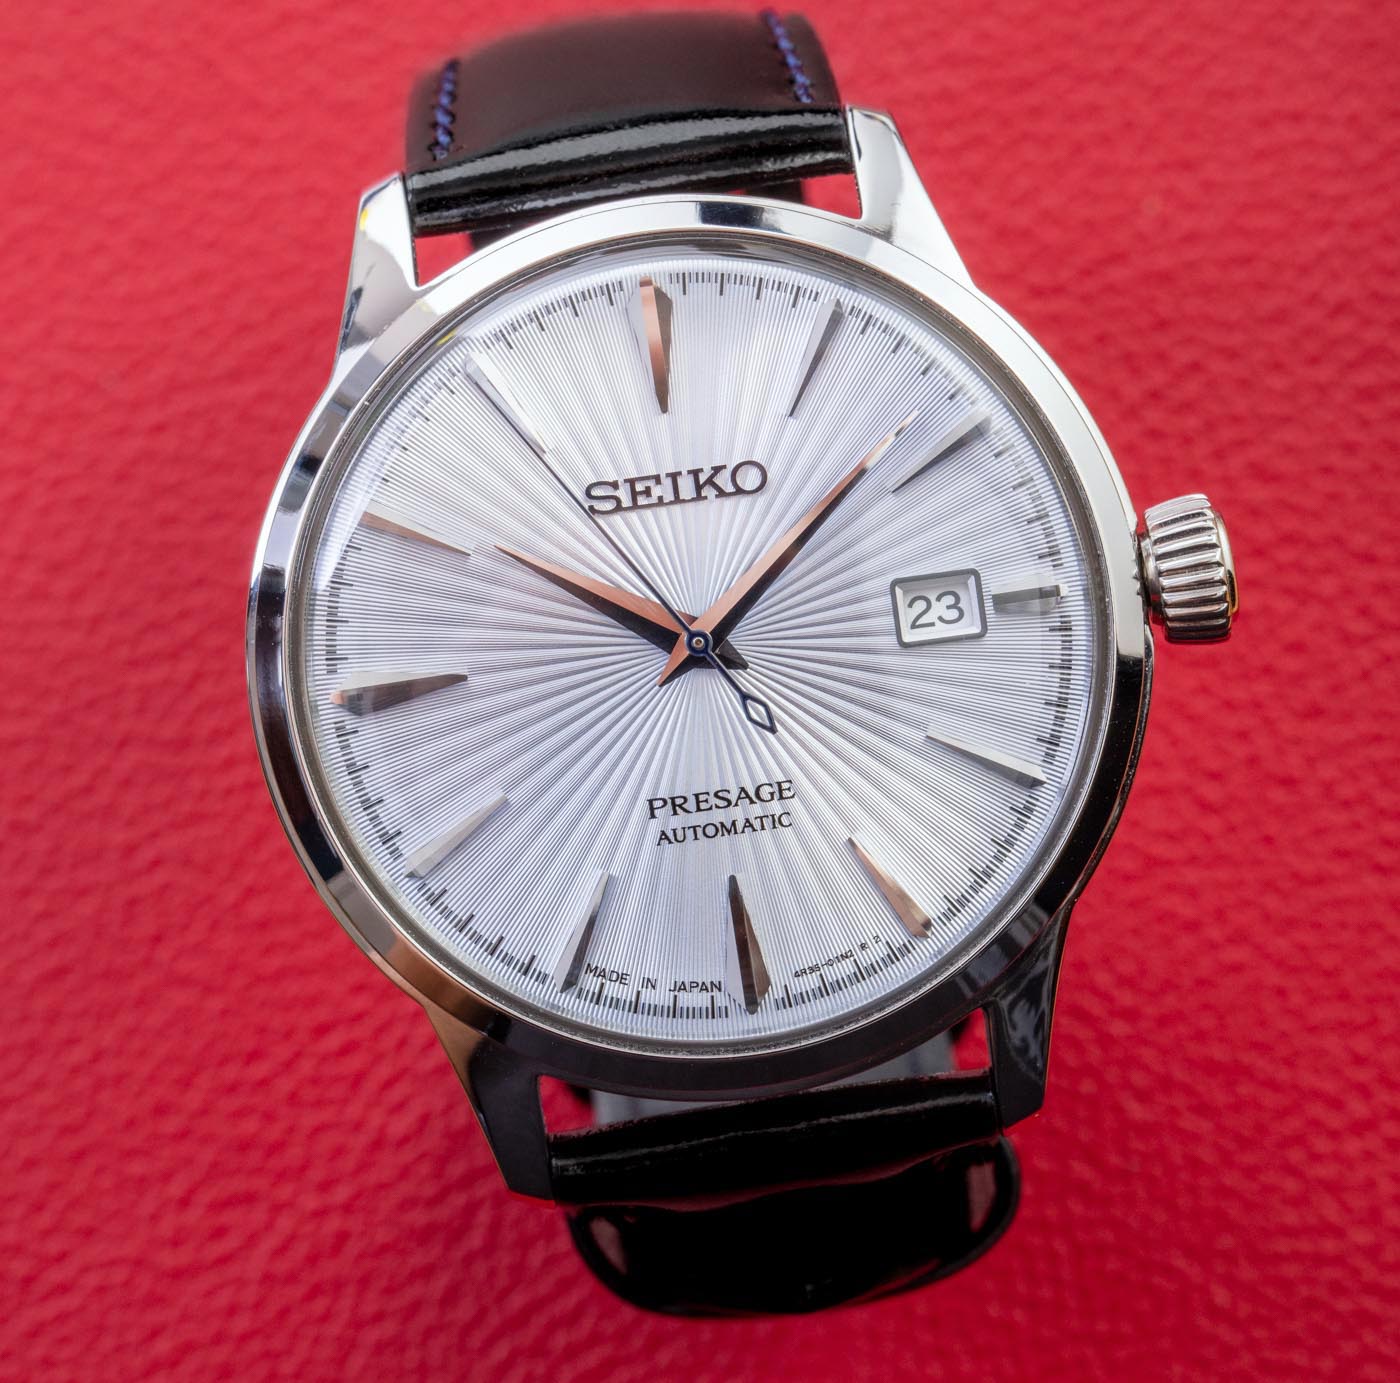 Seiko Presage Automatic SRPB43 Watch Review | aBlogtoWatch